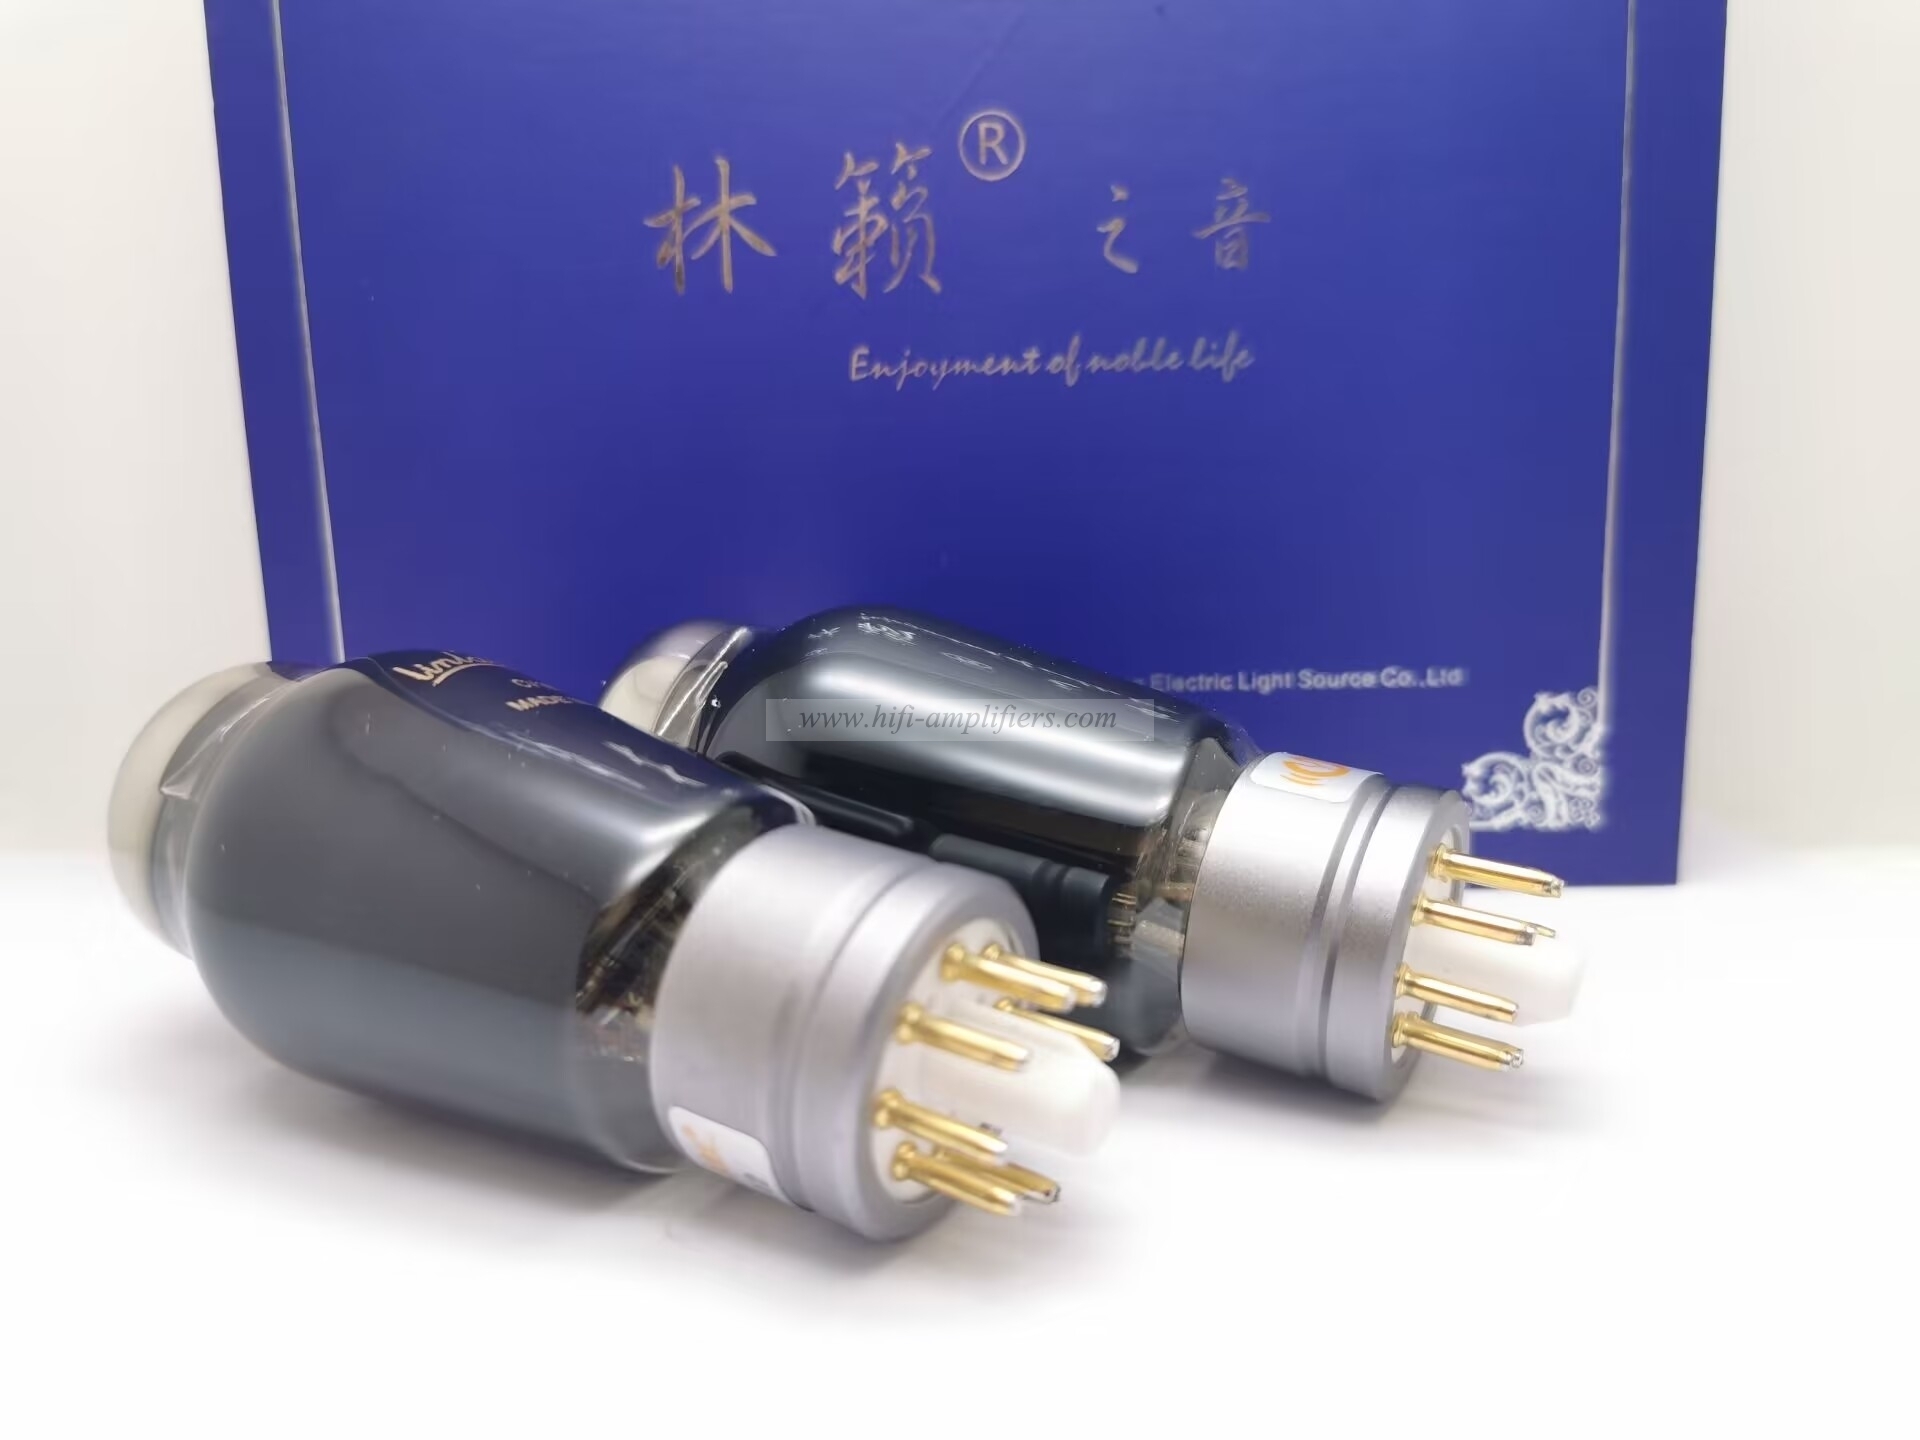 LINLAI CV181-H Vakuumröhren-HIFI-Audioventil ersetzt 6SN7/6N8P/CV181-TII/CV181 passendes Paar